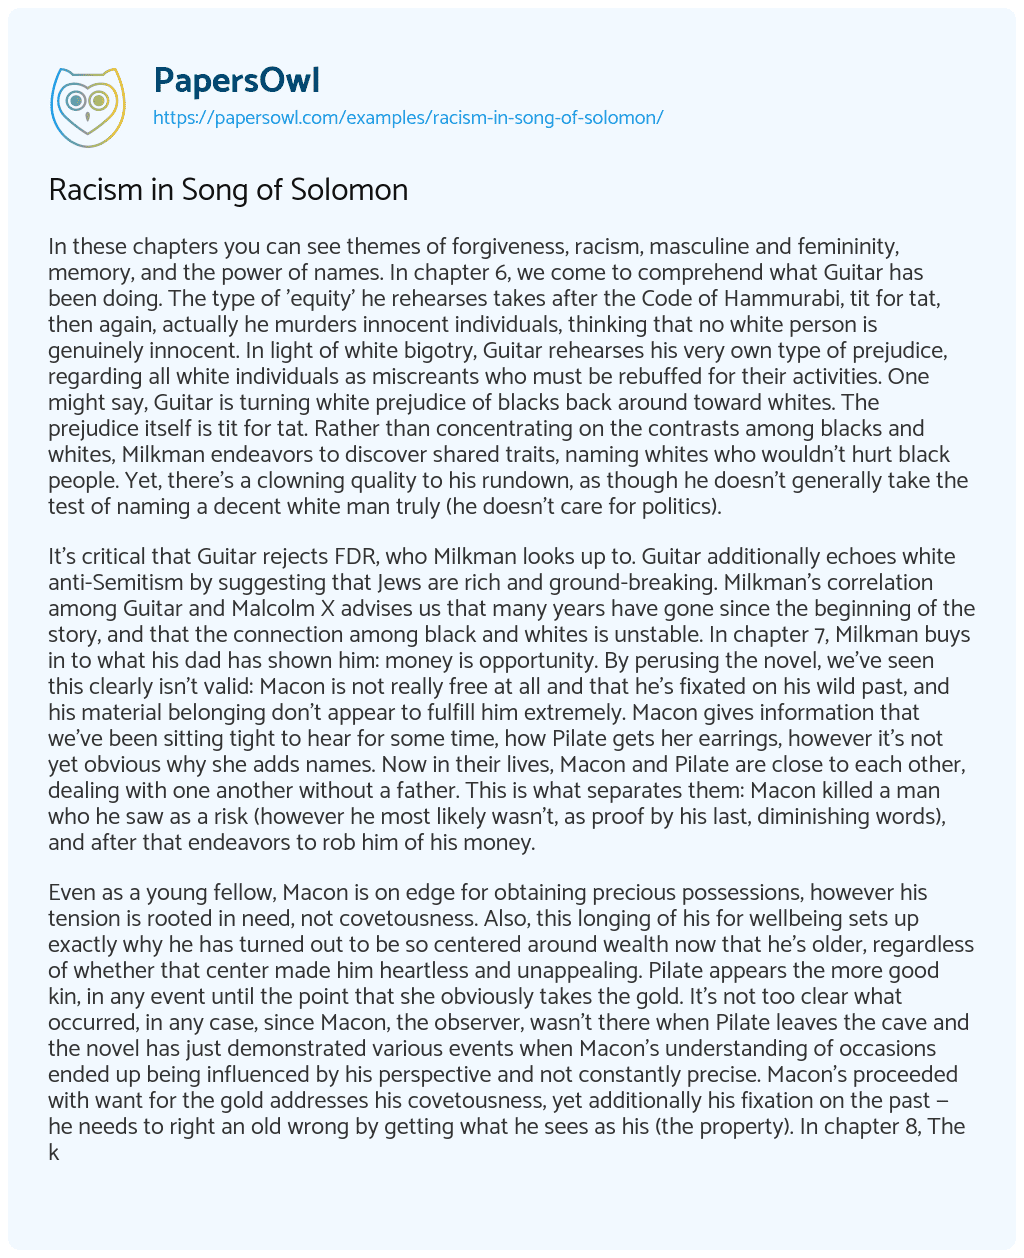 Essay on Racism in Song of Solomon